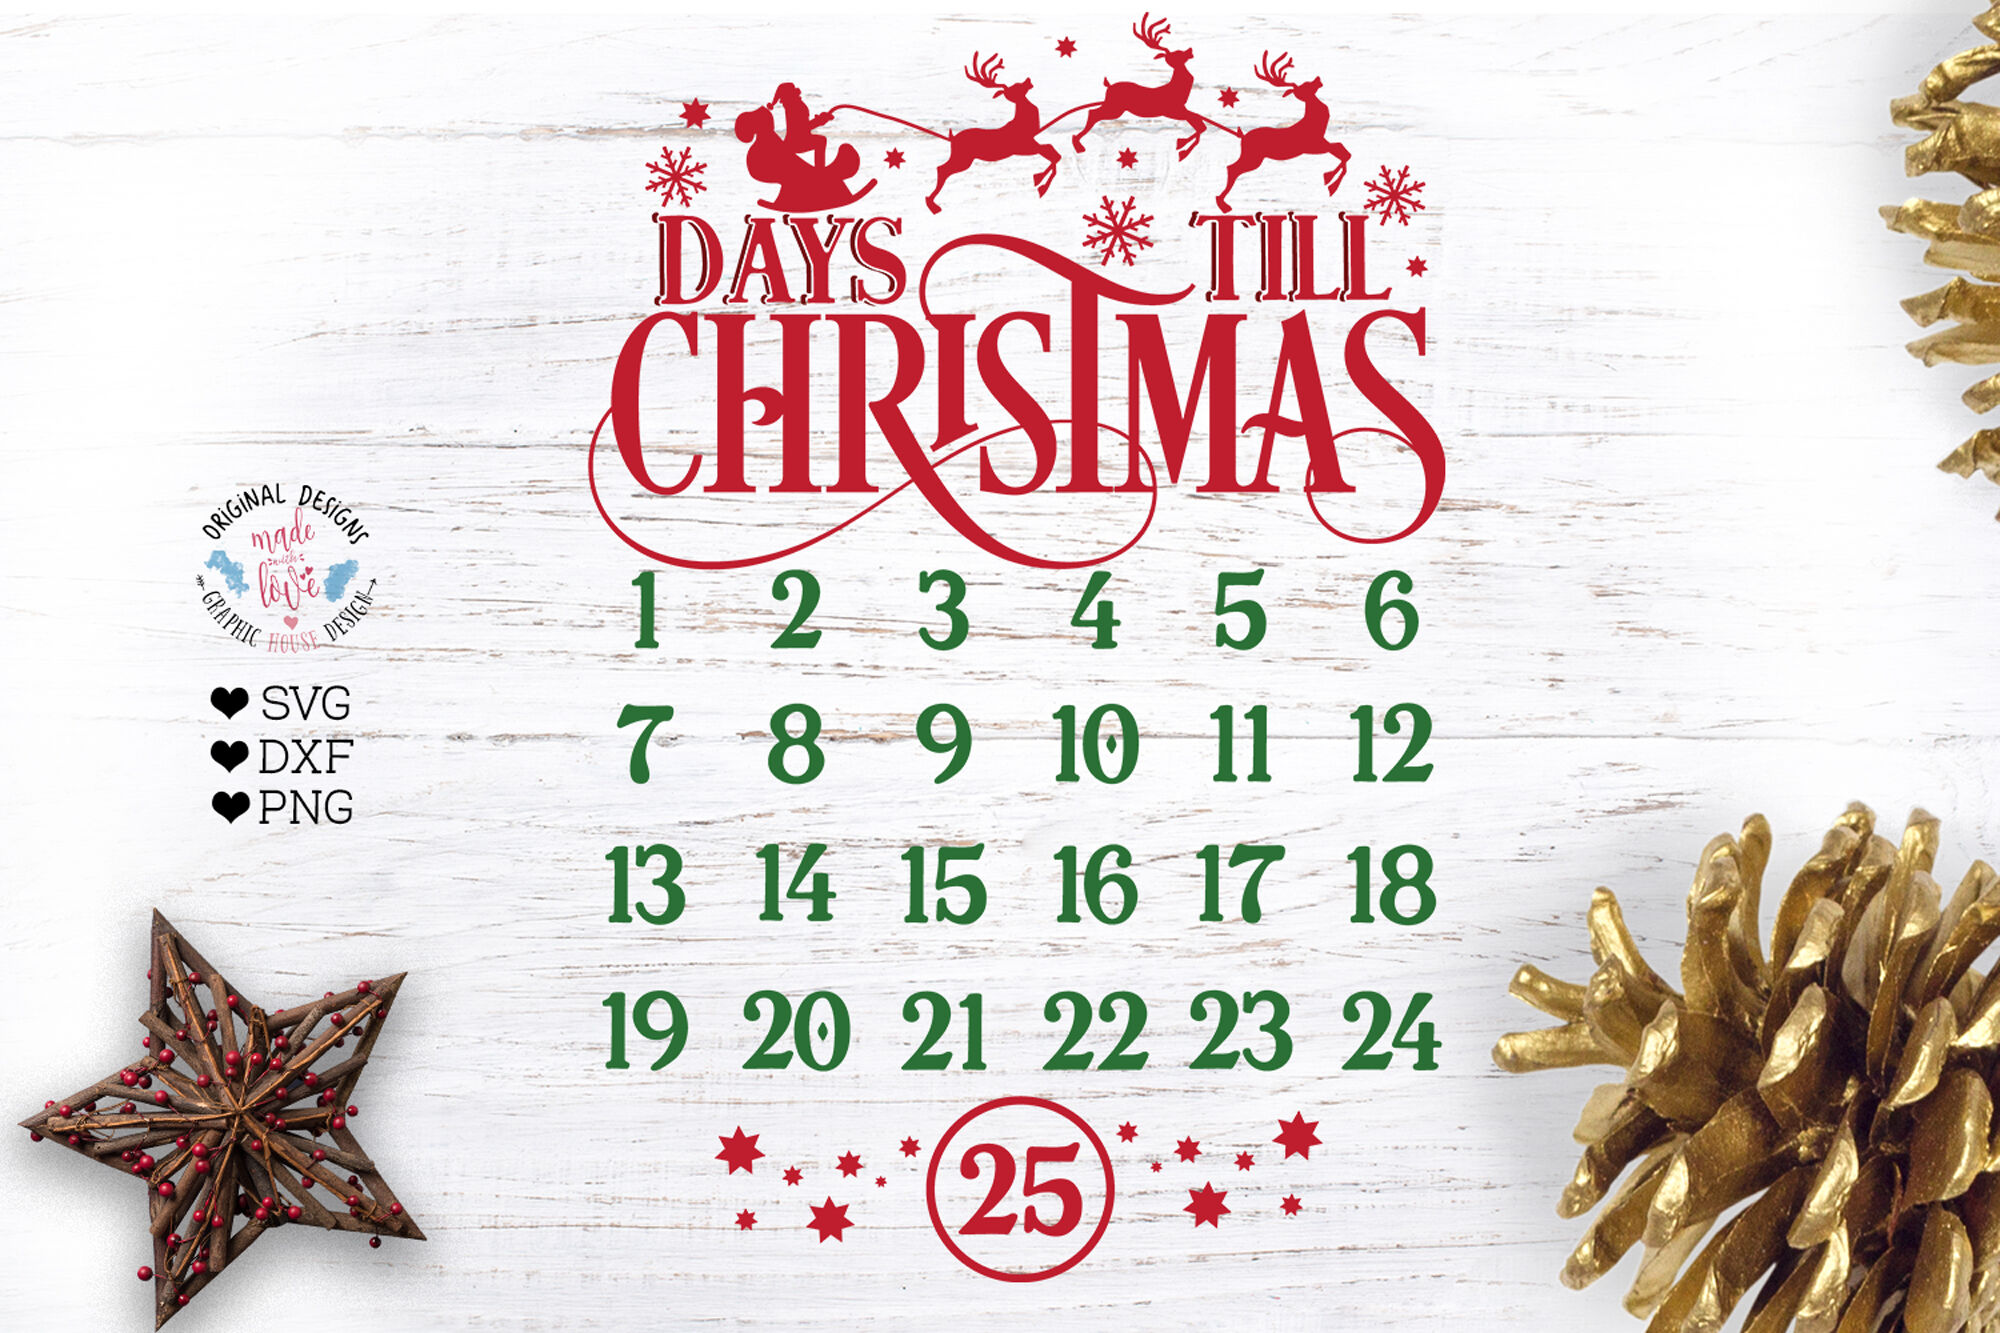 days-till-christmas-countdown-calendar-by-graphichousedesign-thehungryjpeg